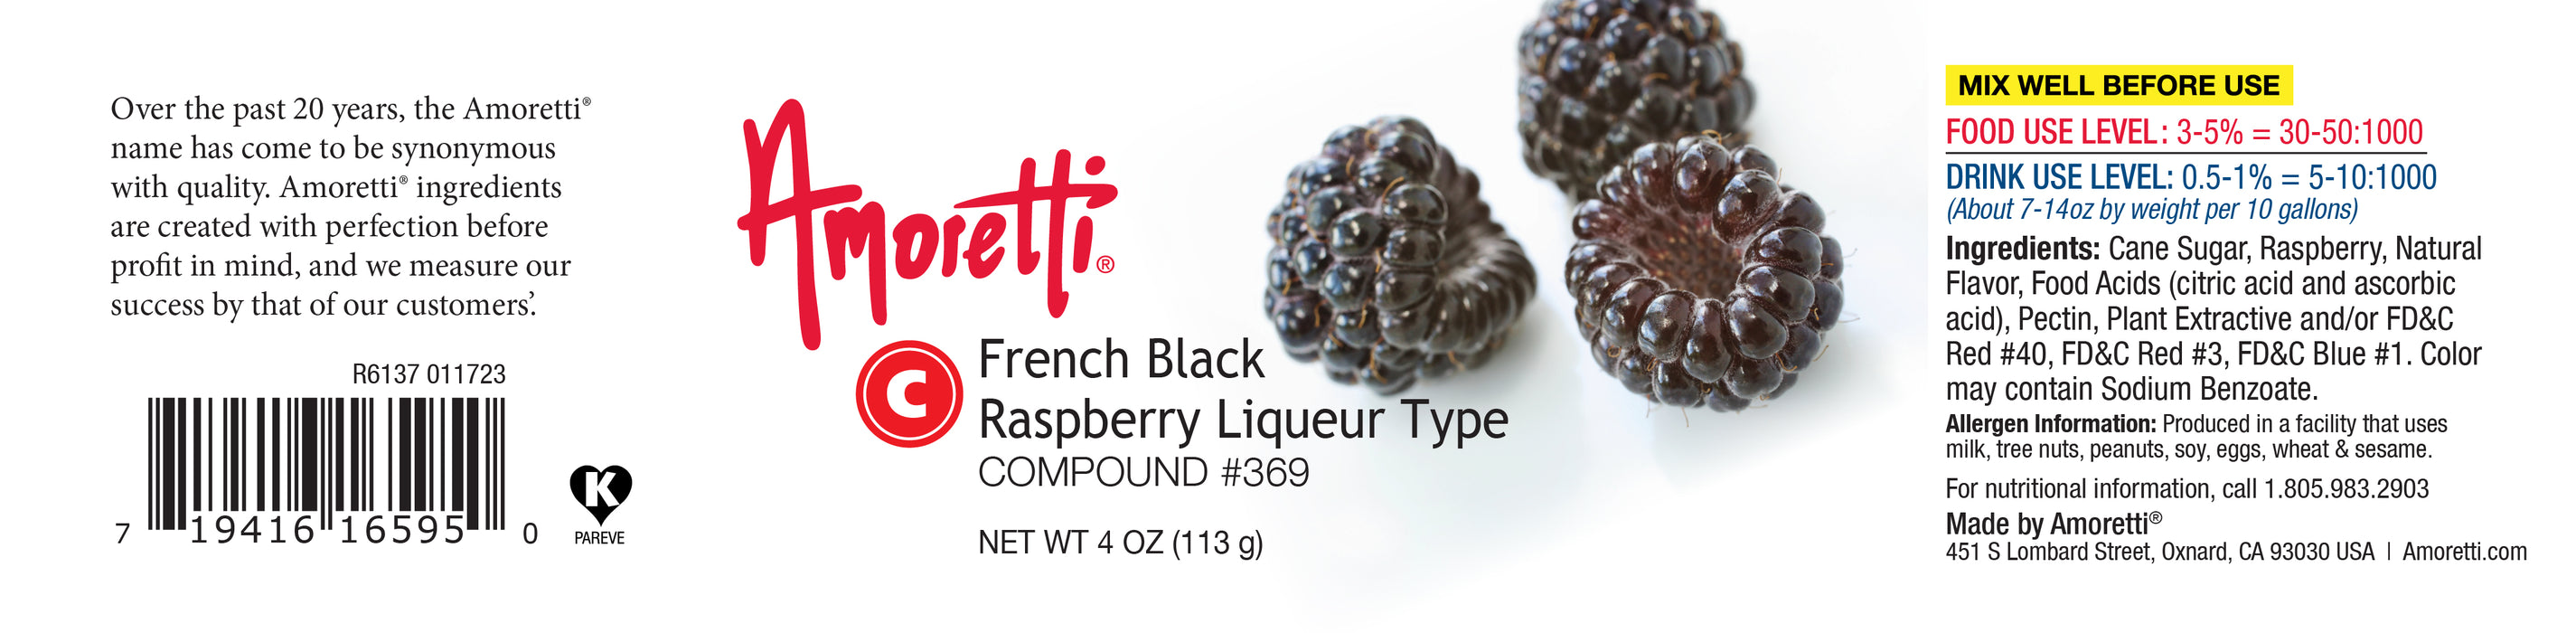 French Black Raspberry Liqueur Type Compound